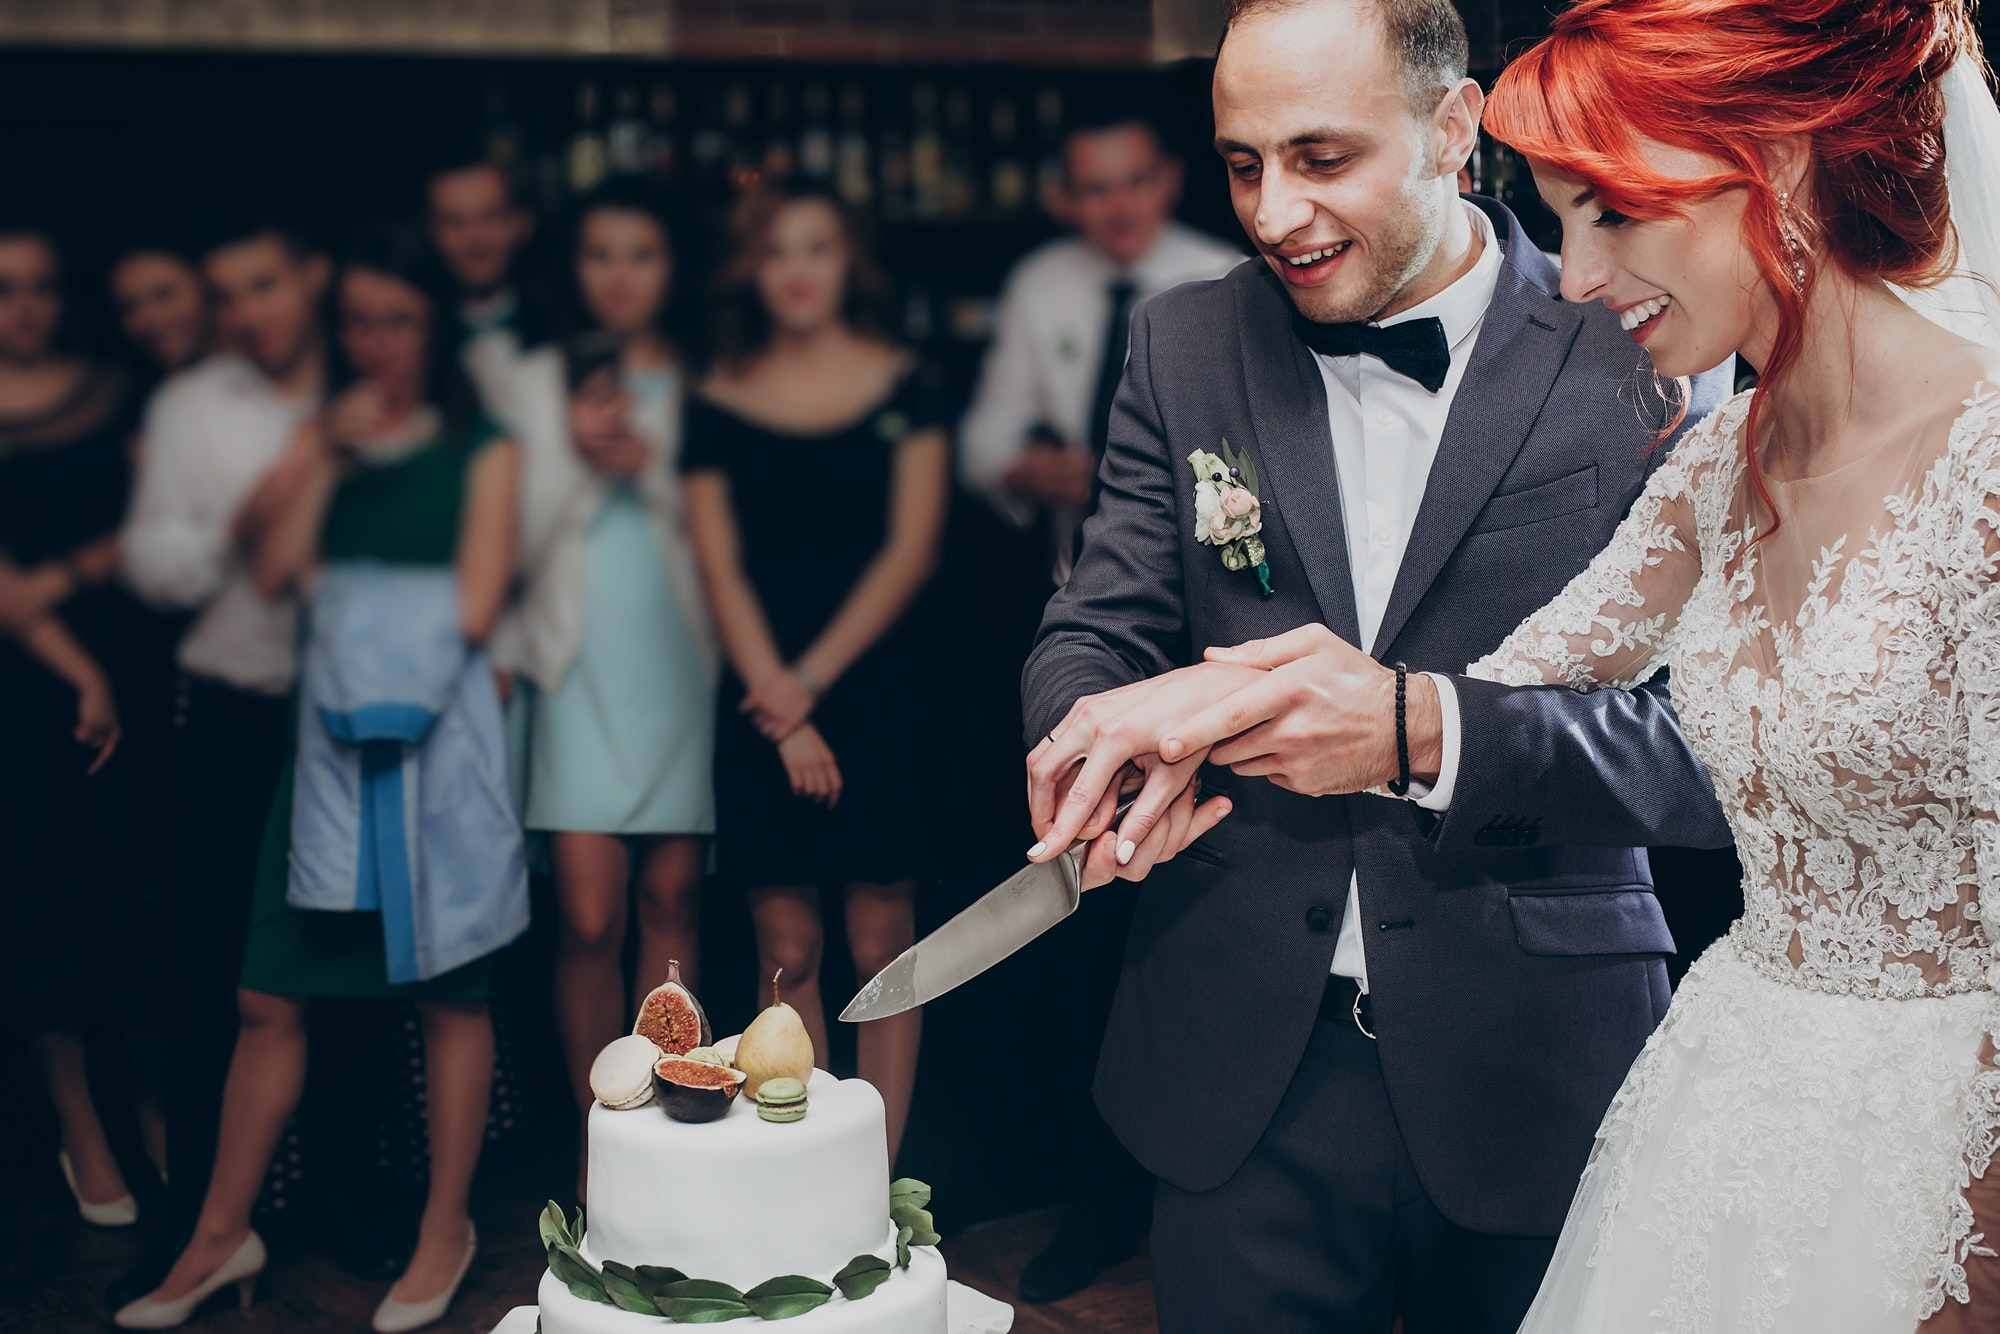 Happy wedding couple cutting together wedding cake